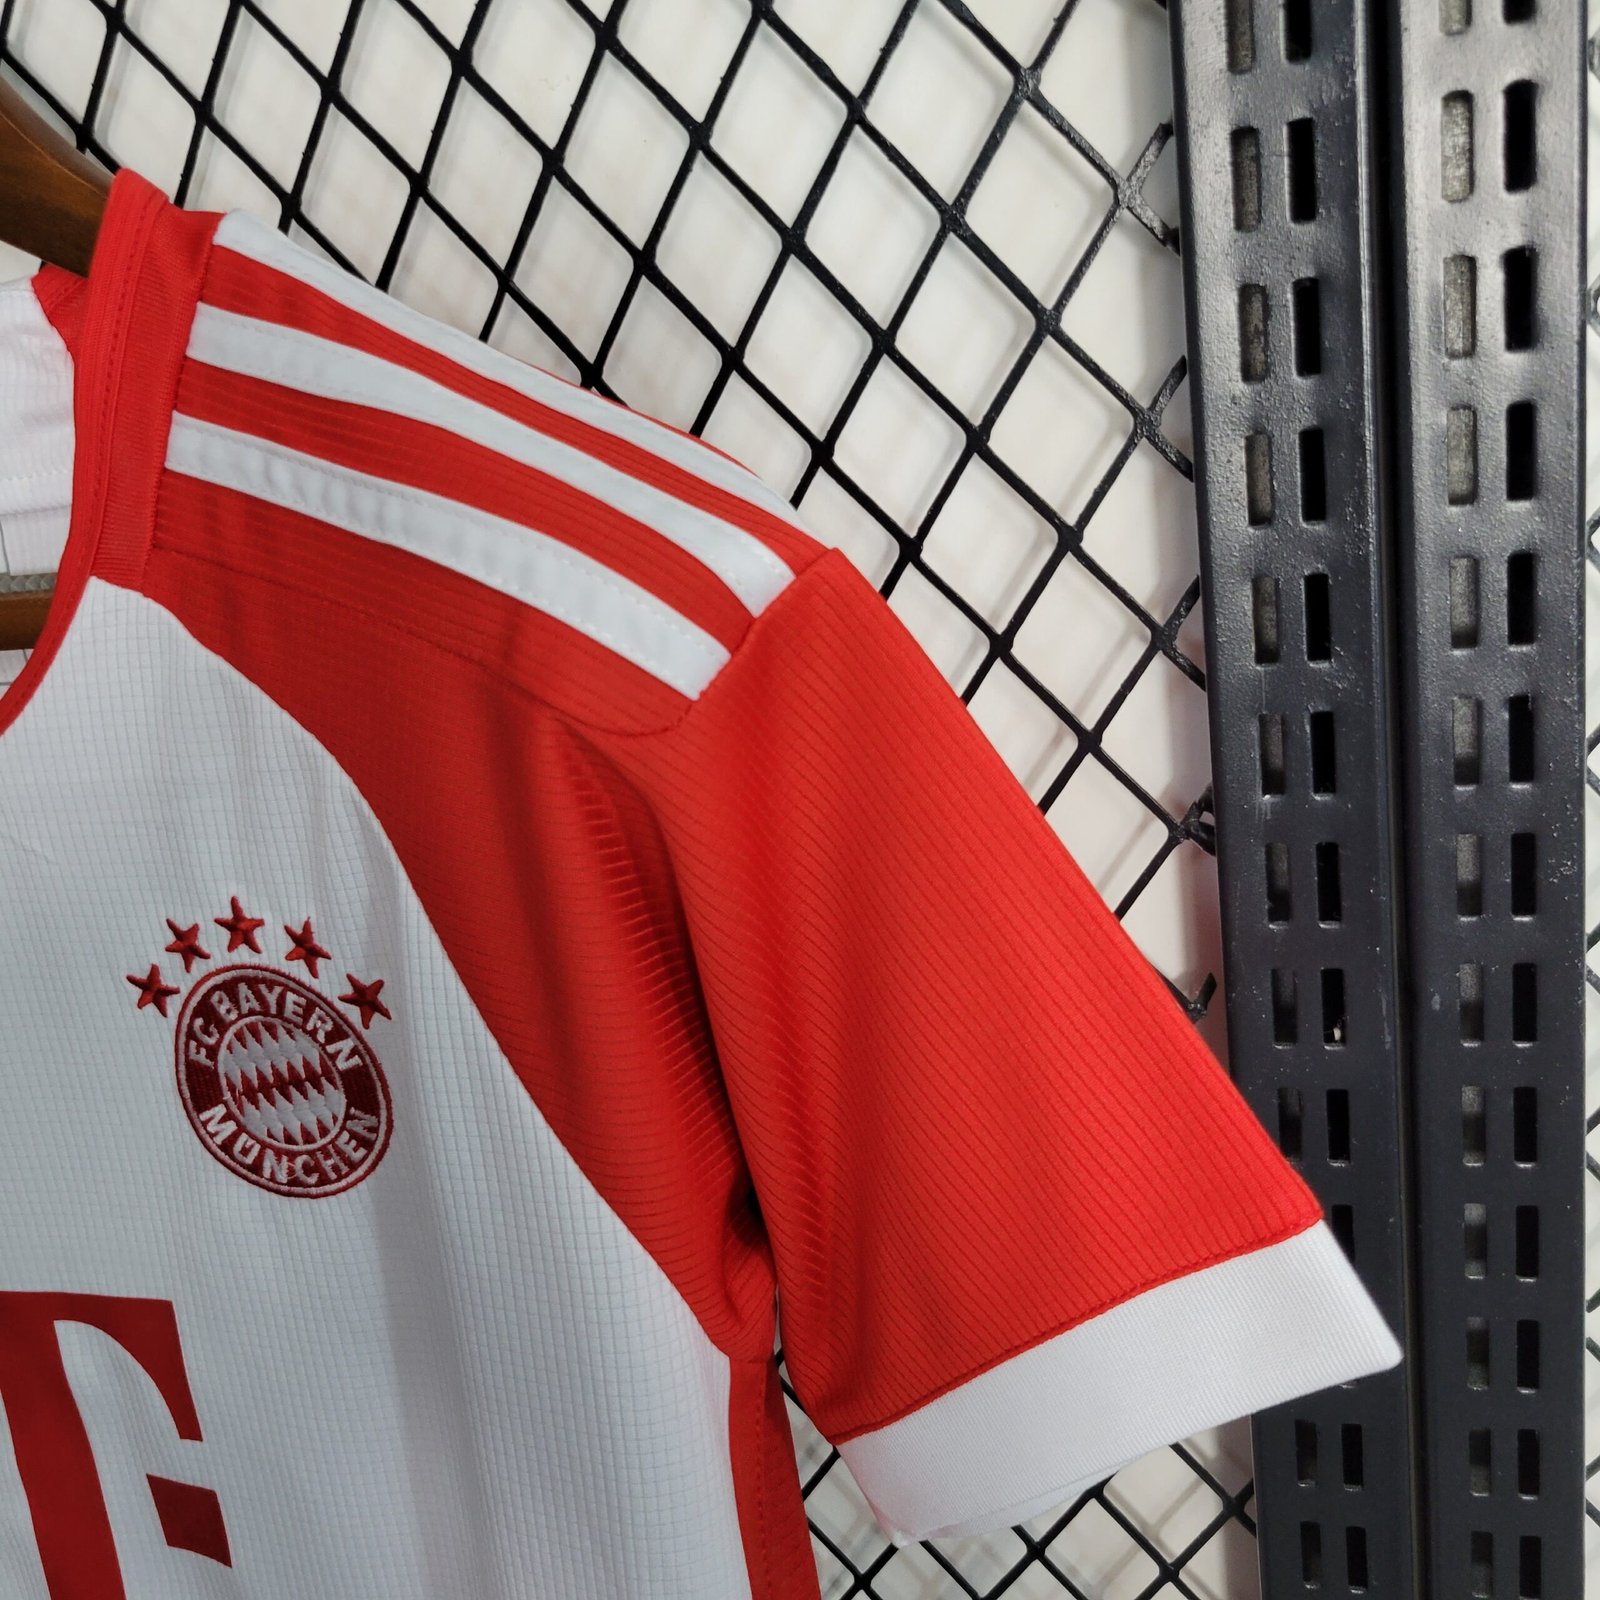 Patch Mundial 2020 Camisa Bayern de Munique